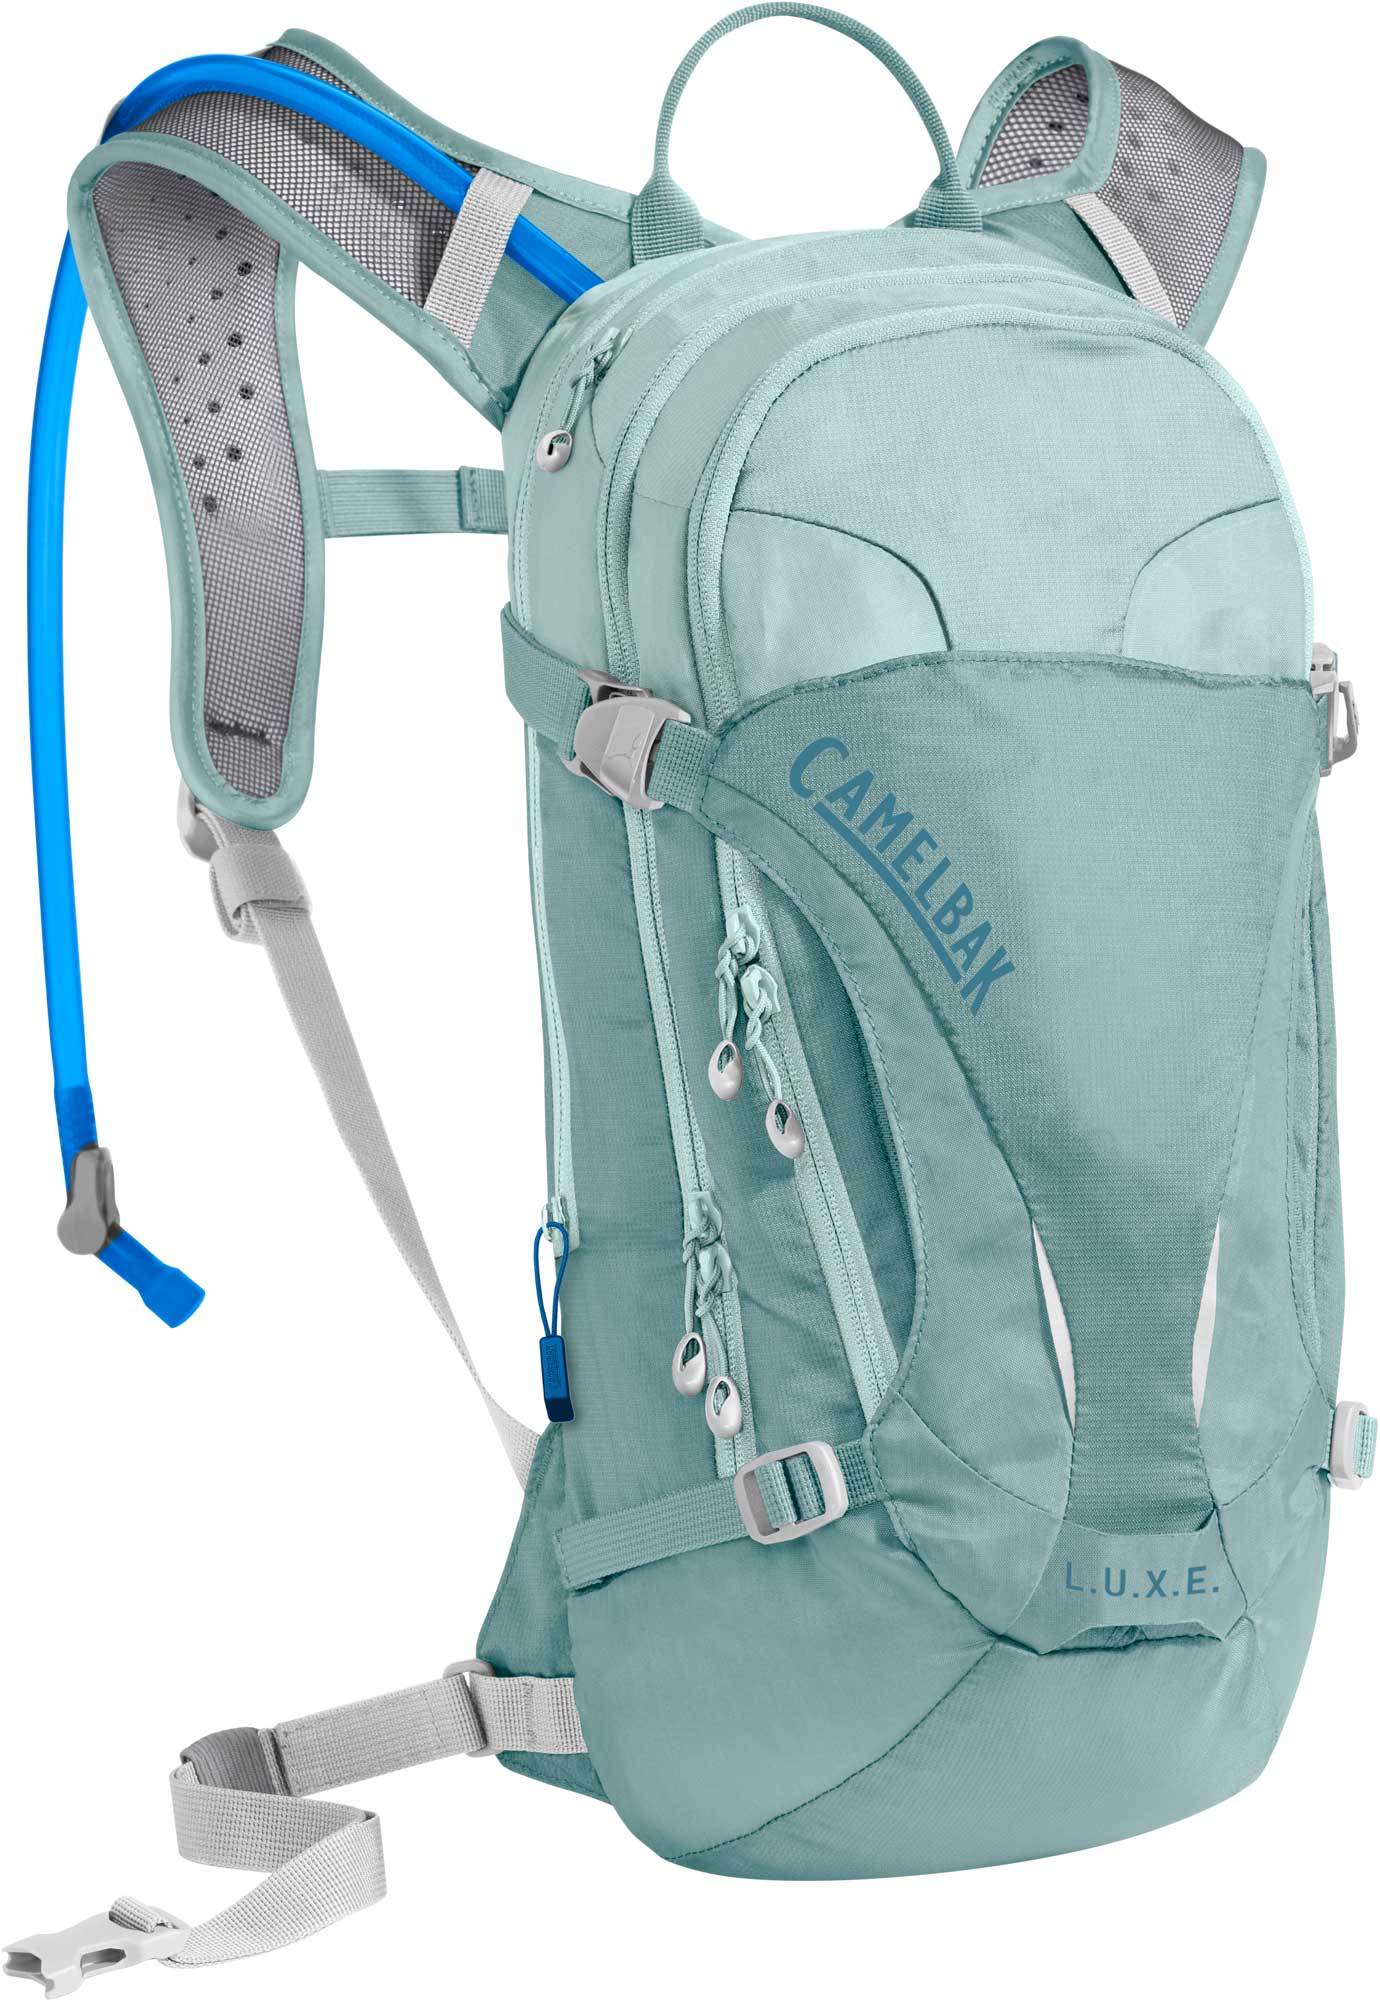 Camelbak Luxe - Cycling backpack - Women's